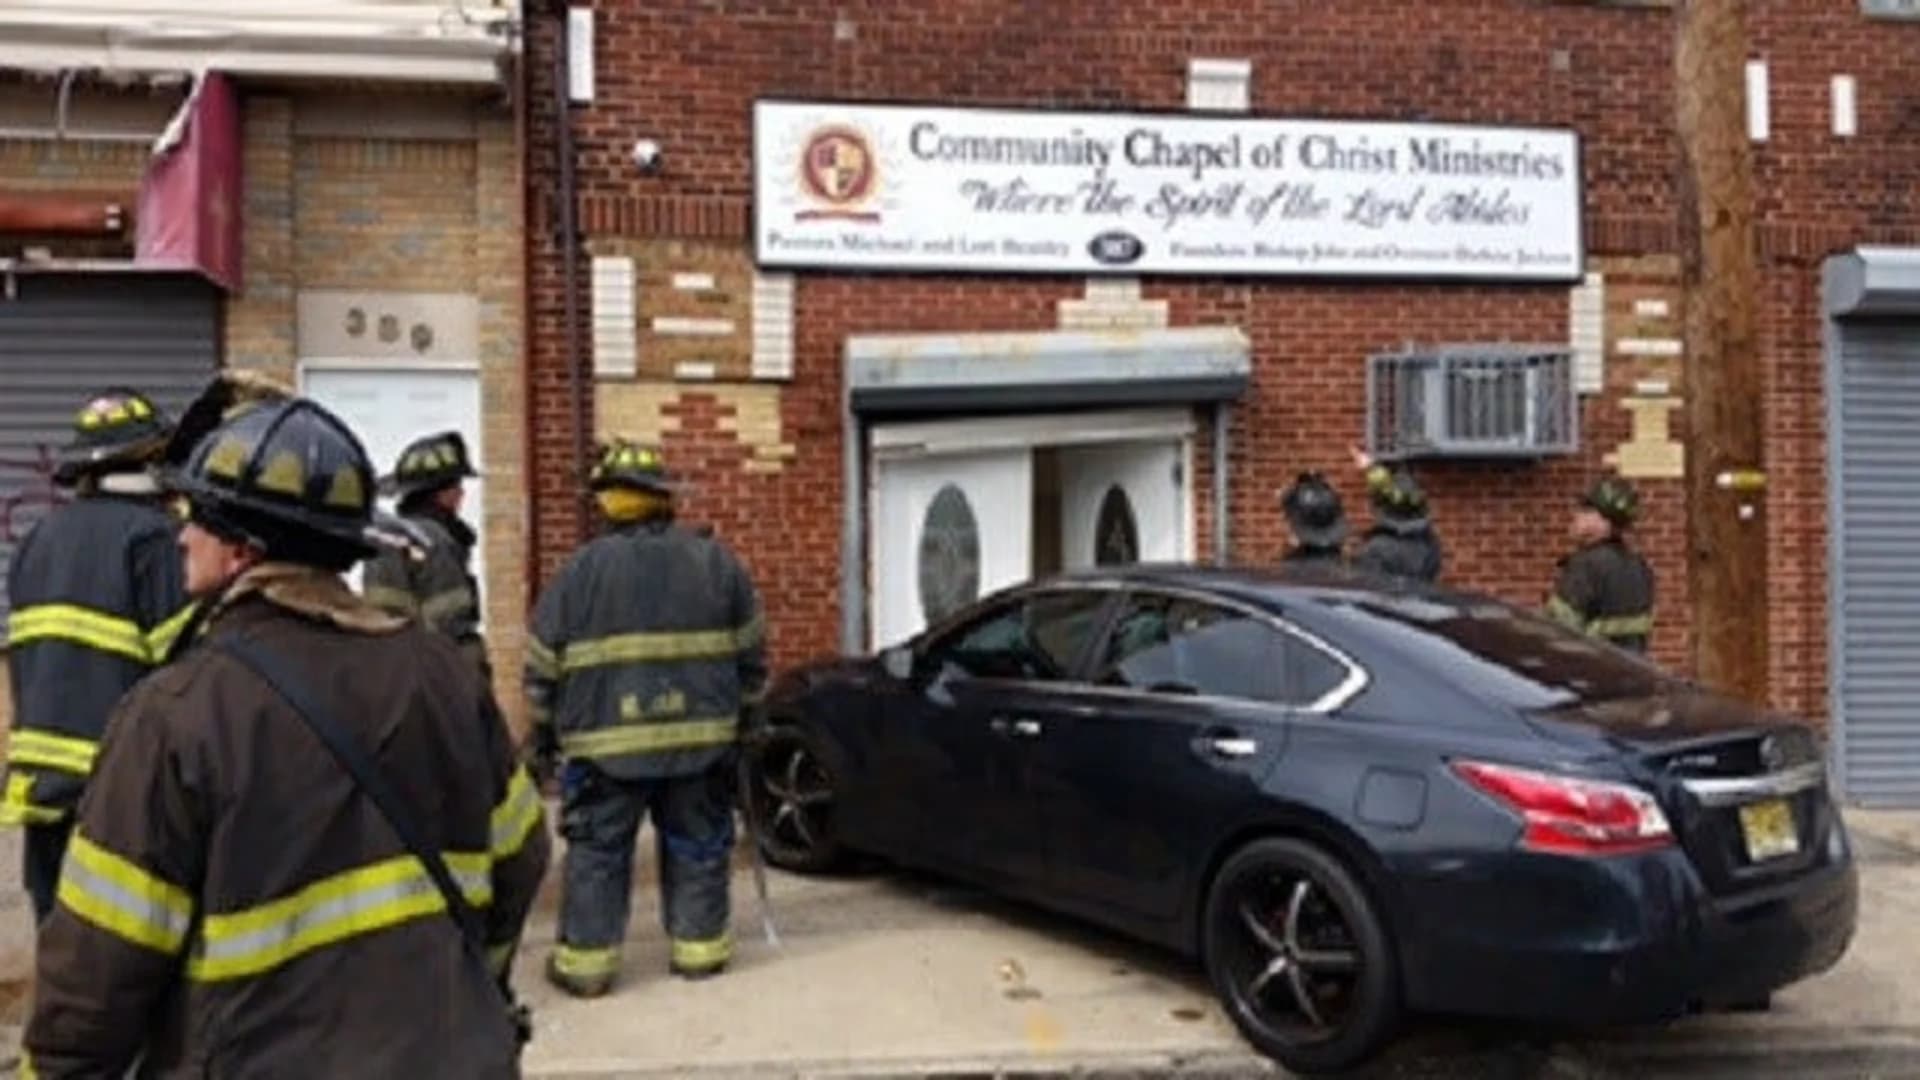 Police seek person who crashed stolen car into Newark church